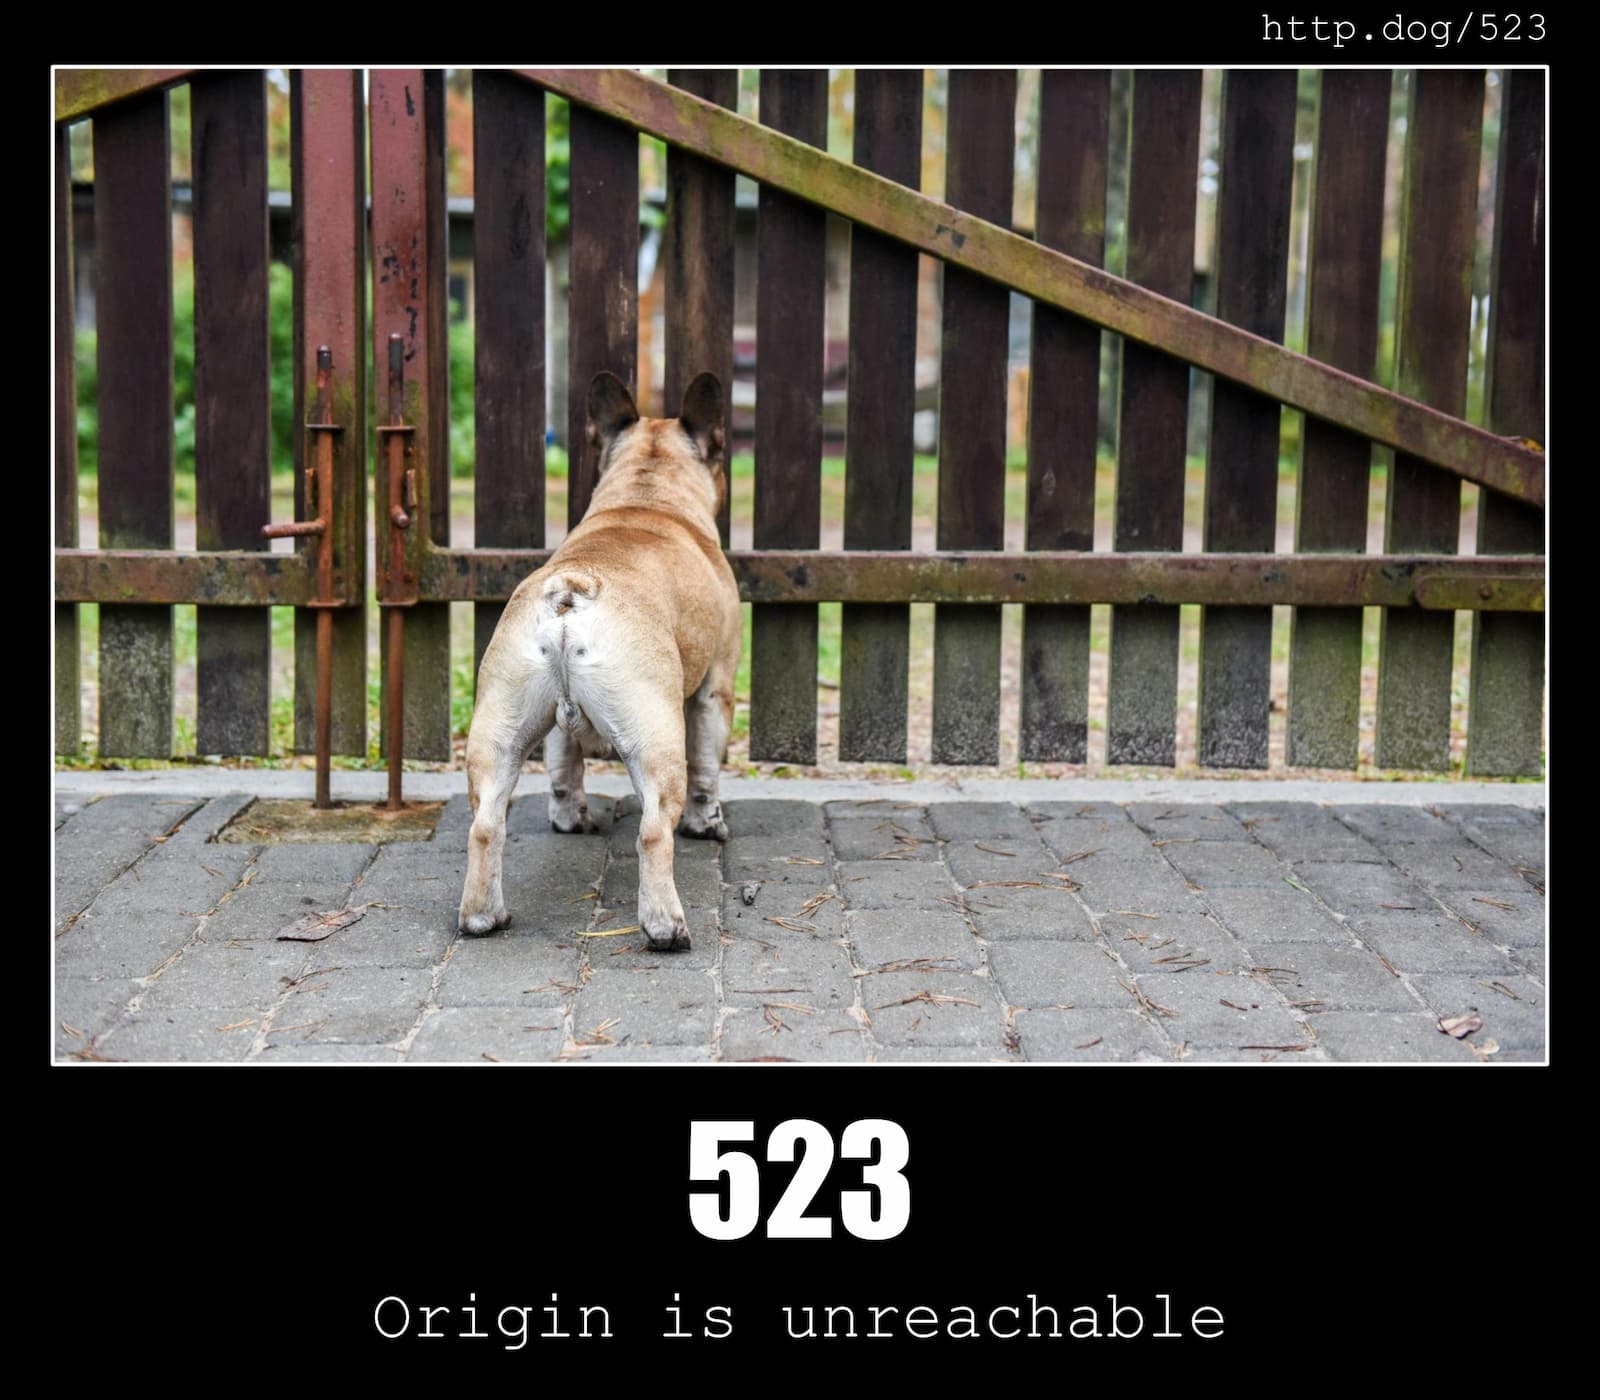 HTTP Status Code 523 Origin is unreachable & Dogs